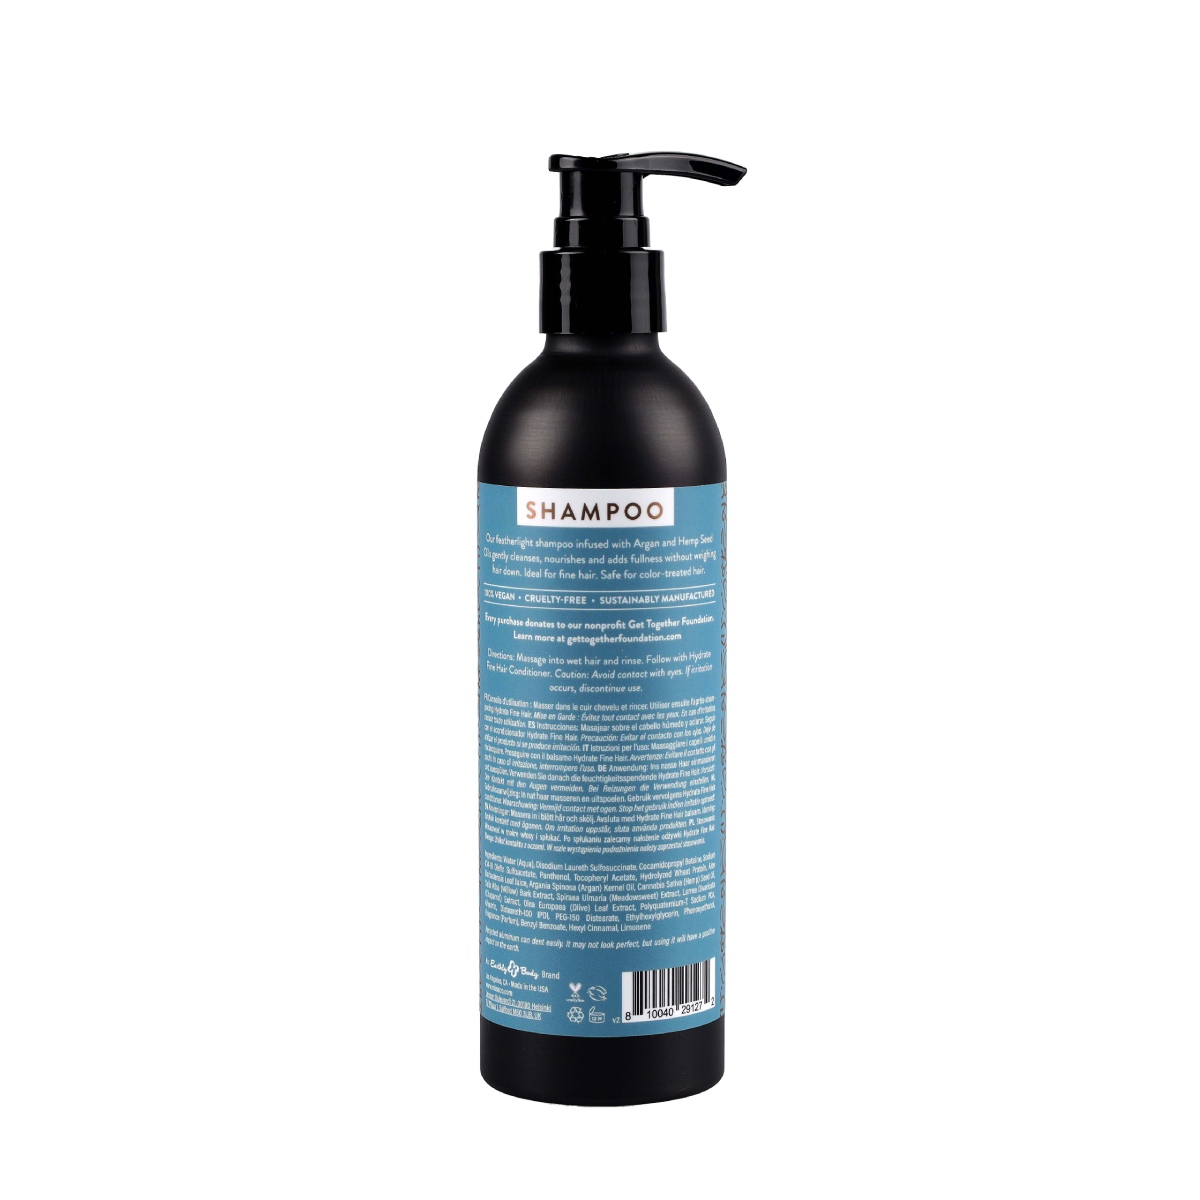 MKS eco Nourish Shampoo for Fine Hair | Shop Earthly Body